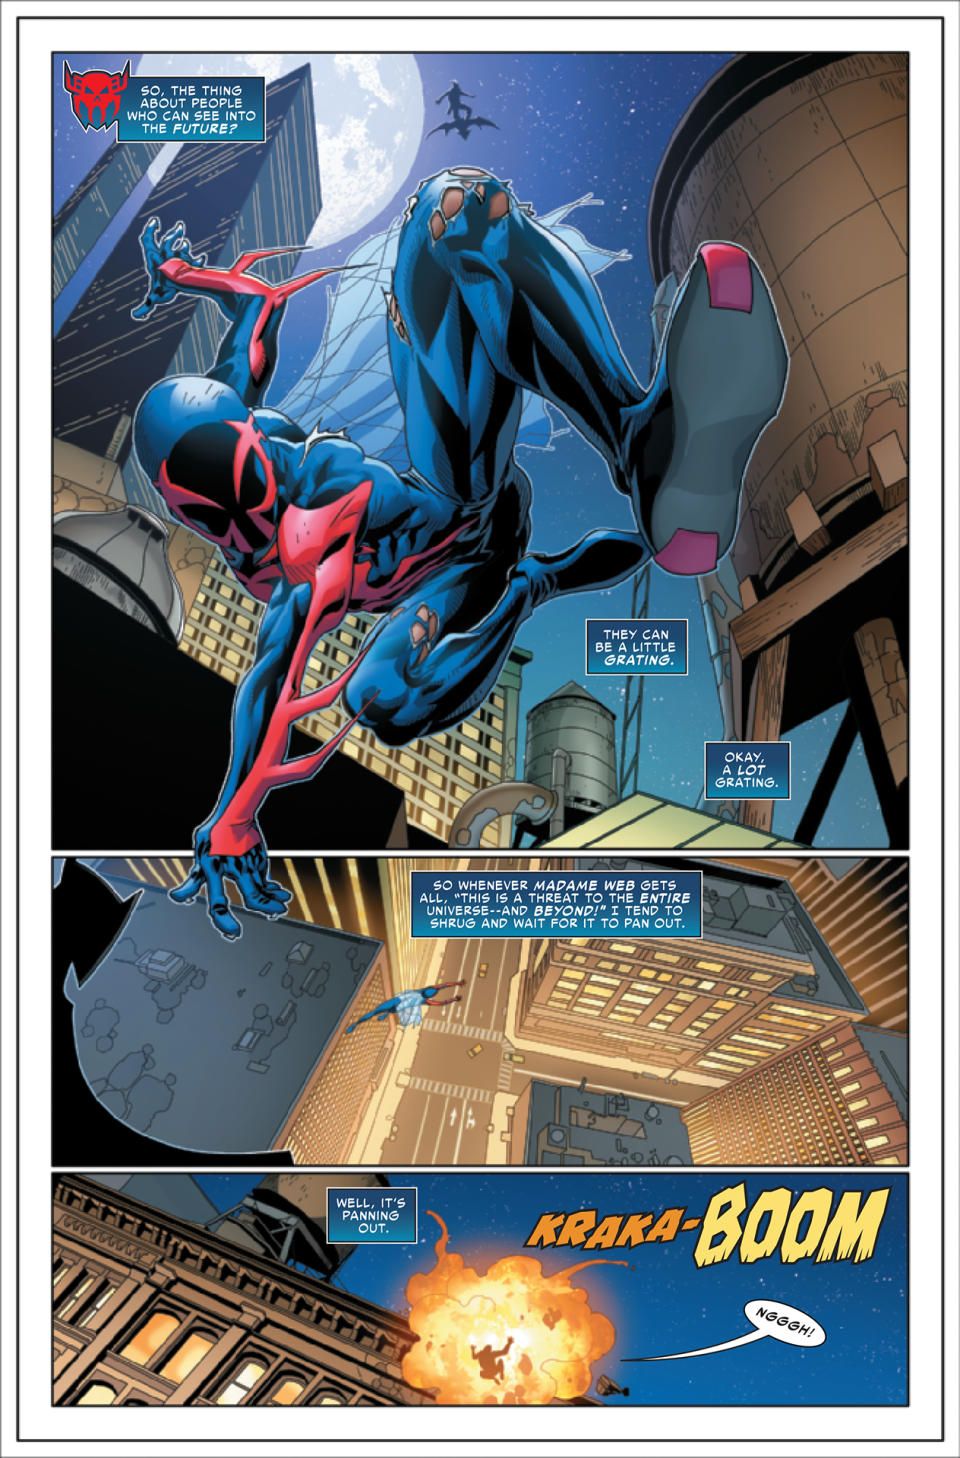 Web of Spider-Man #1